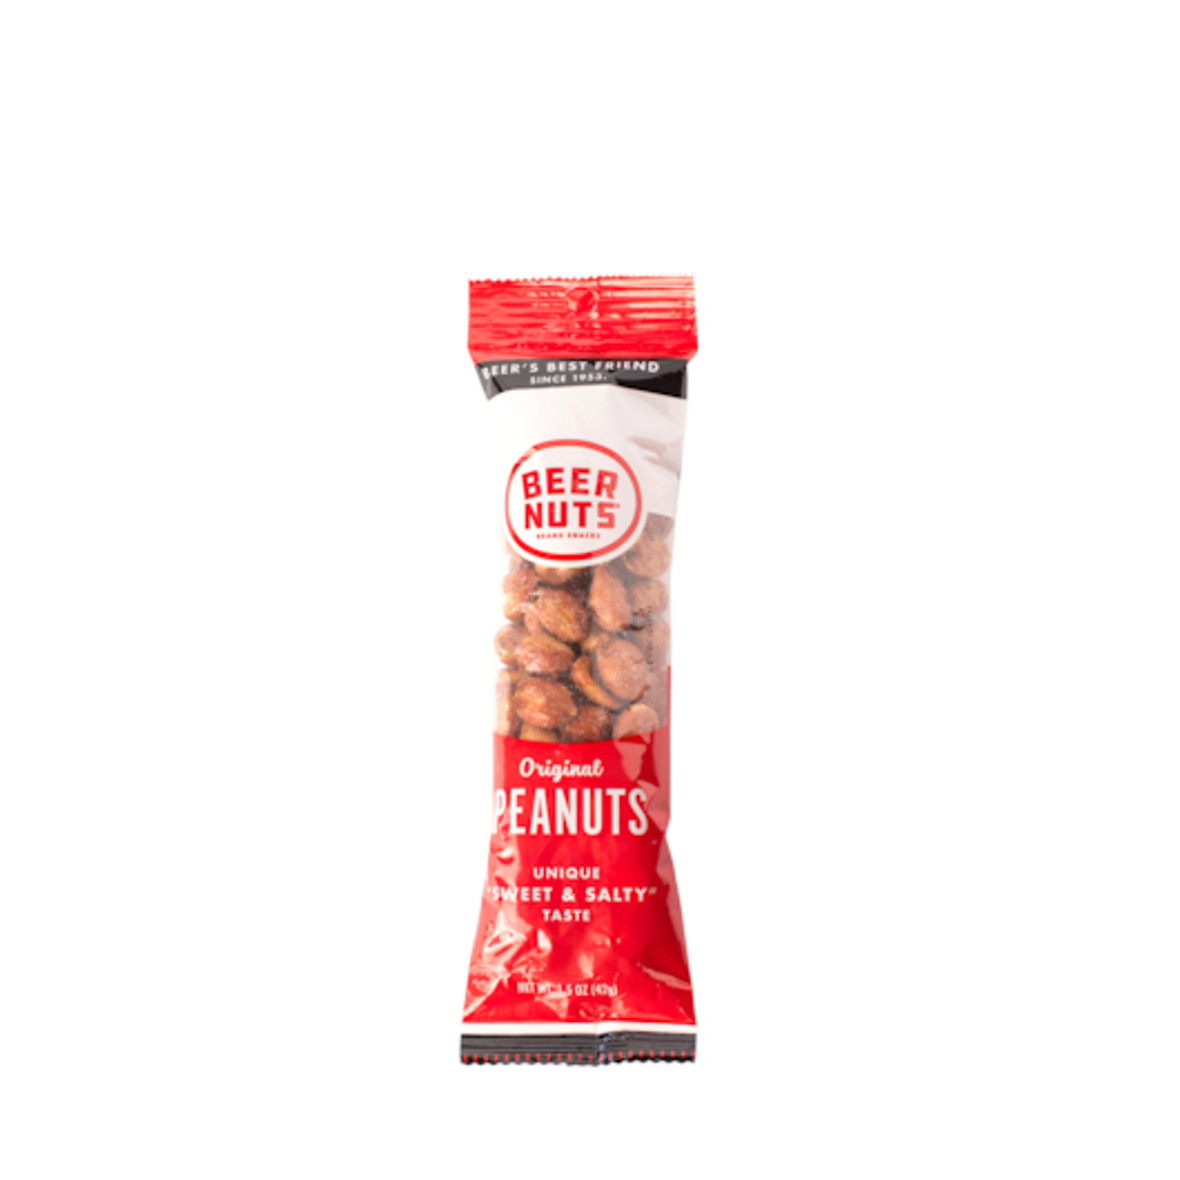 Beer Nuts Original Peanut Snack Tube, 1.5 Ounce, 48 per case